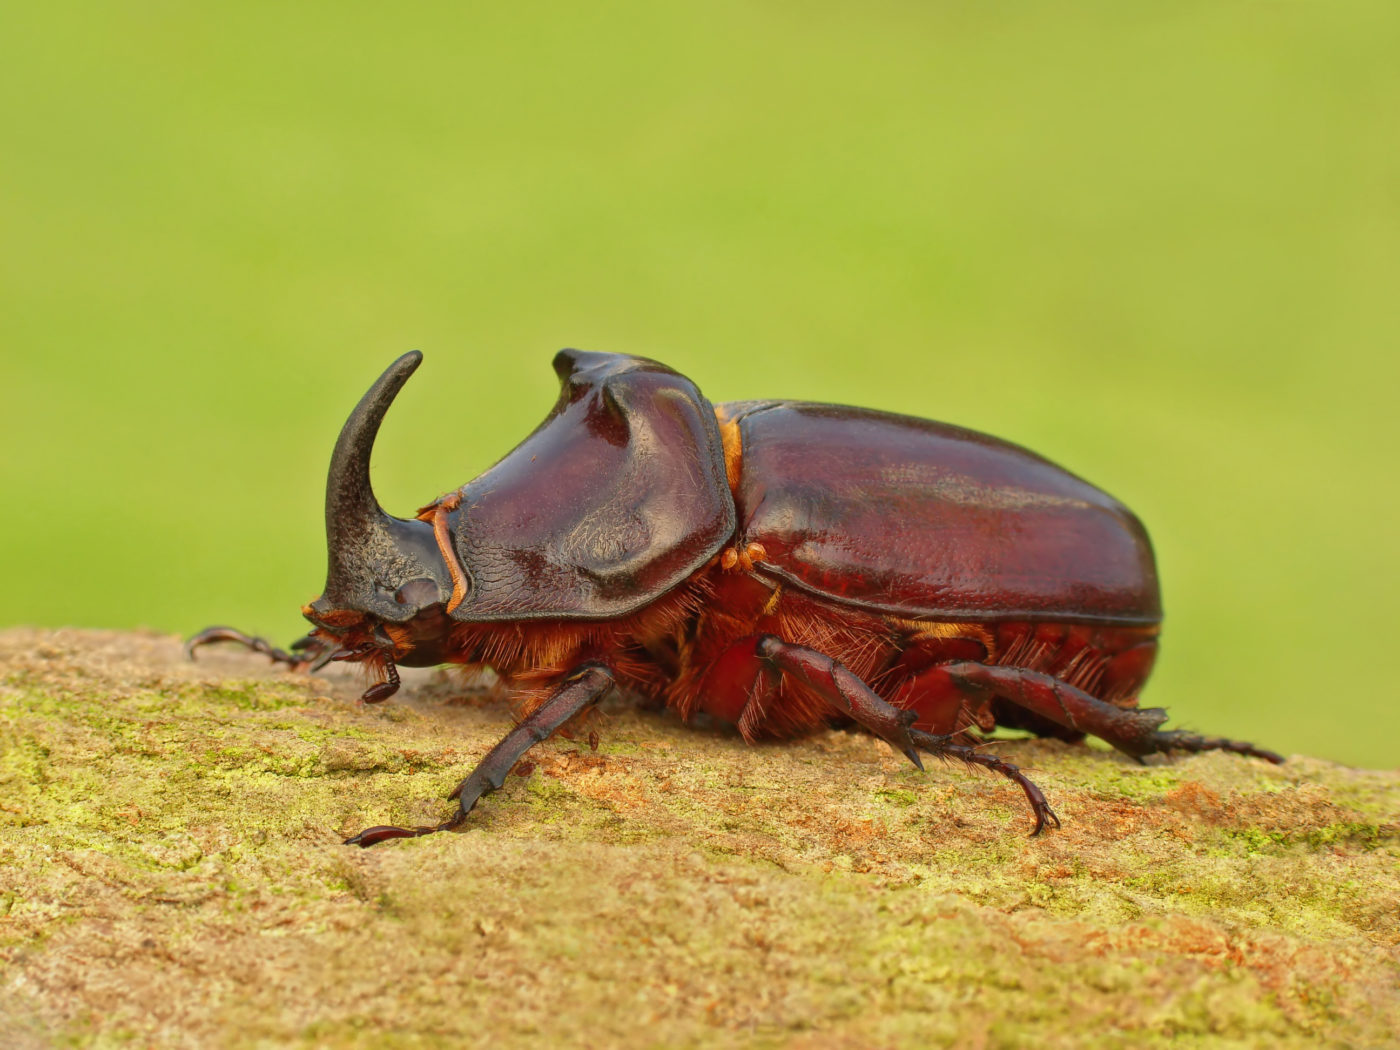 European Rhinoceros beetle, Oryctes nasicornis